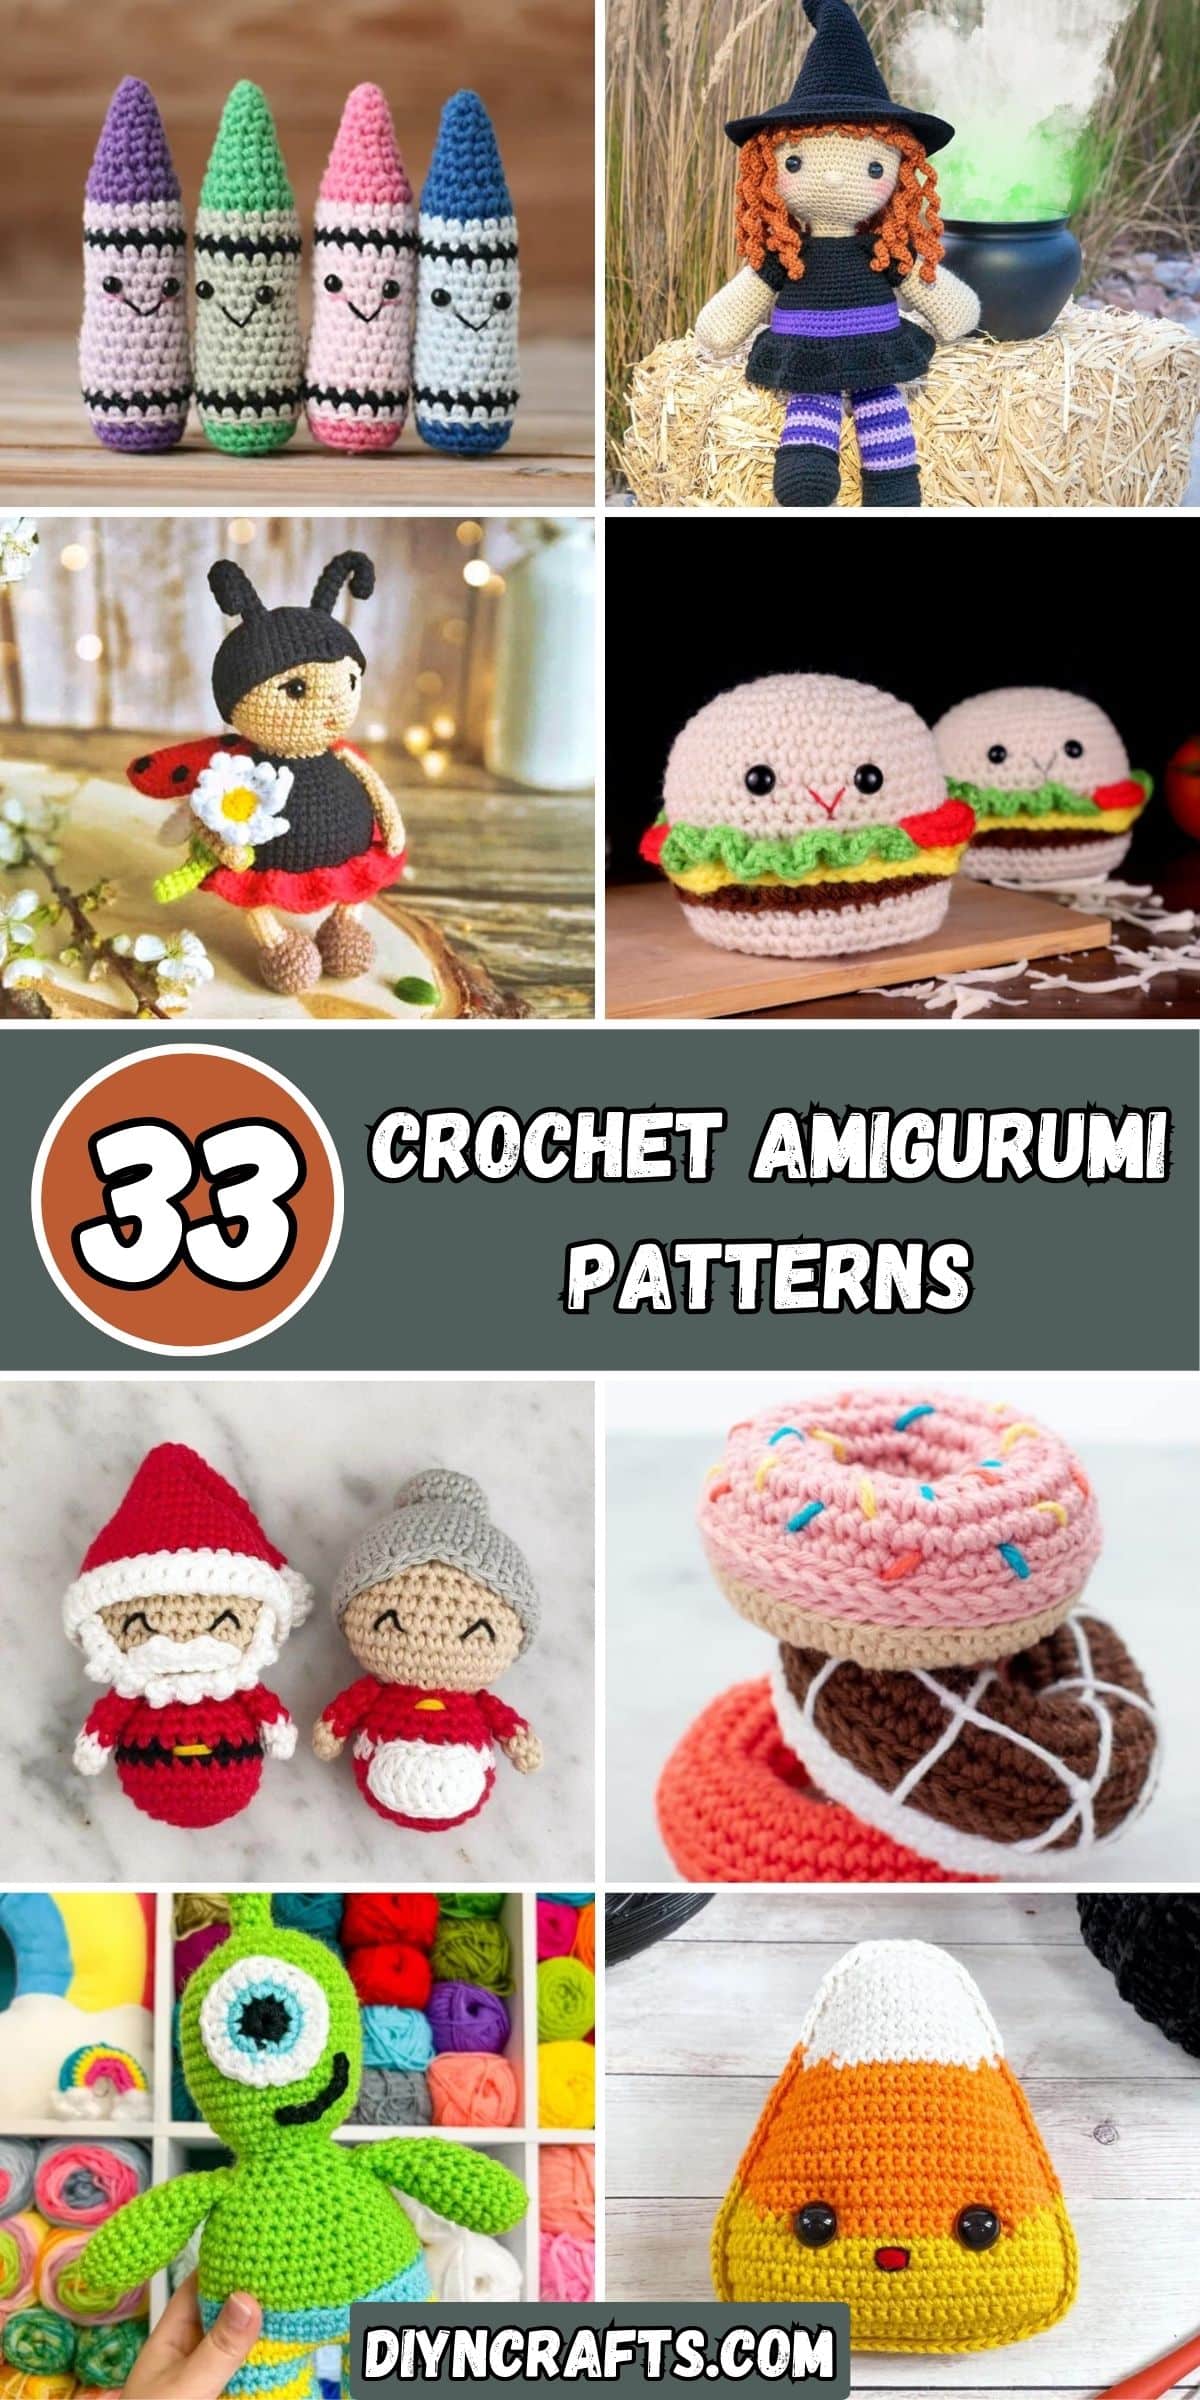 33 Crochet Amigurumi Patterns collage.